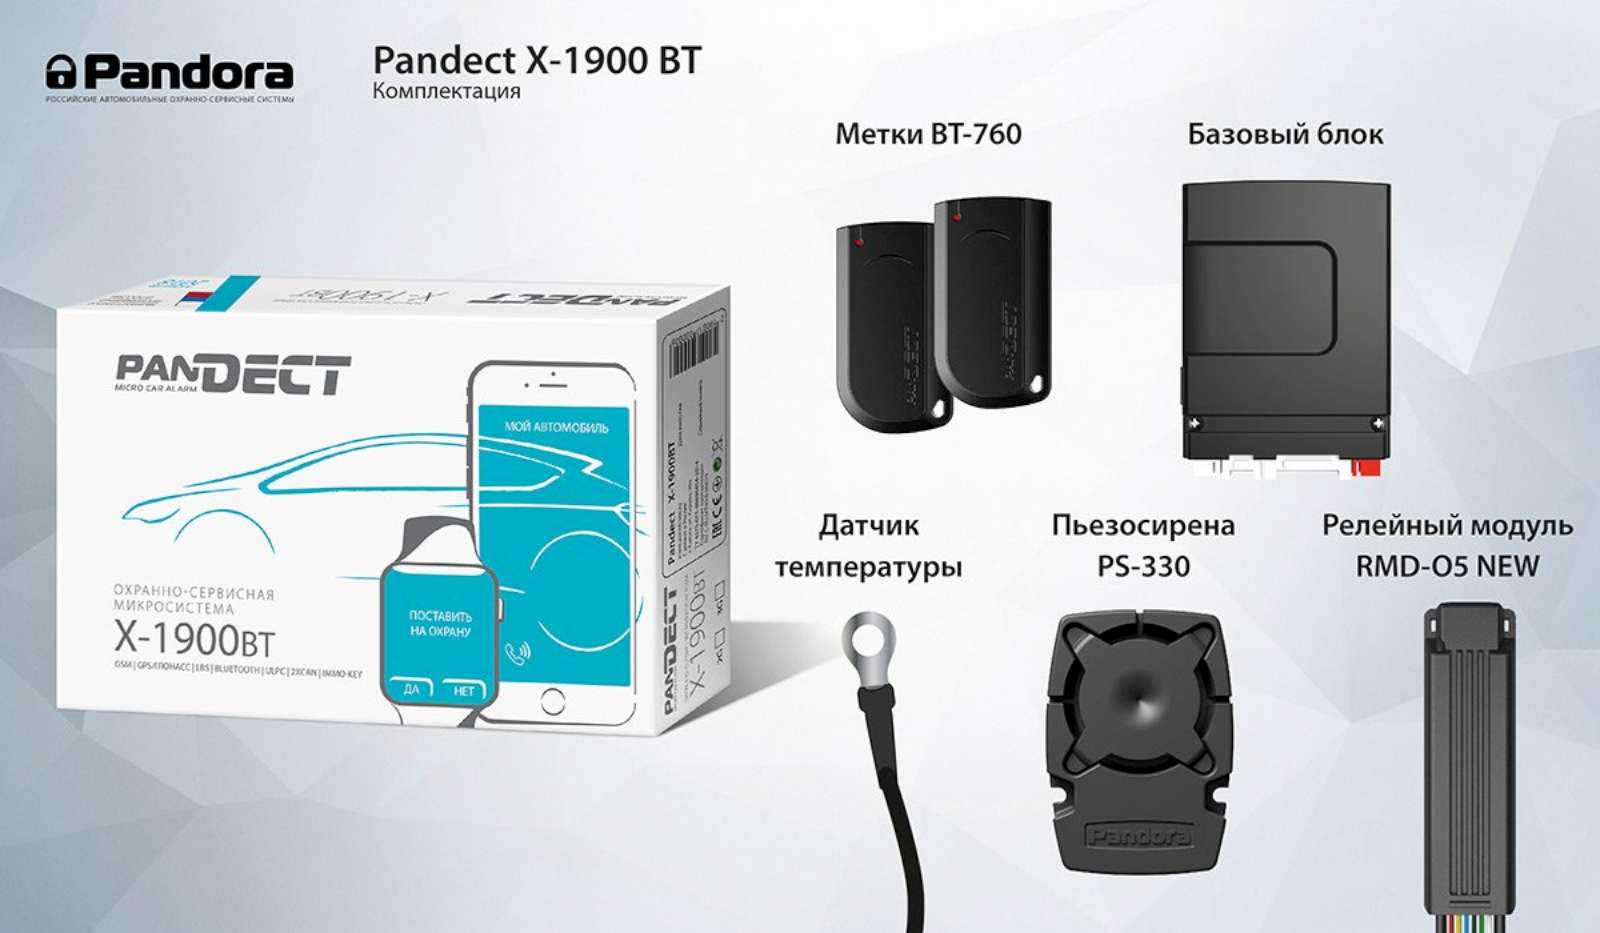 Сигнализация pandect. Сигнализация Pandect x-1900 BT. Pandect bt760. Автосигнализация Pandect x-1900bt 3g. Пандора корпус BT 760.